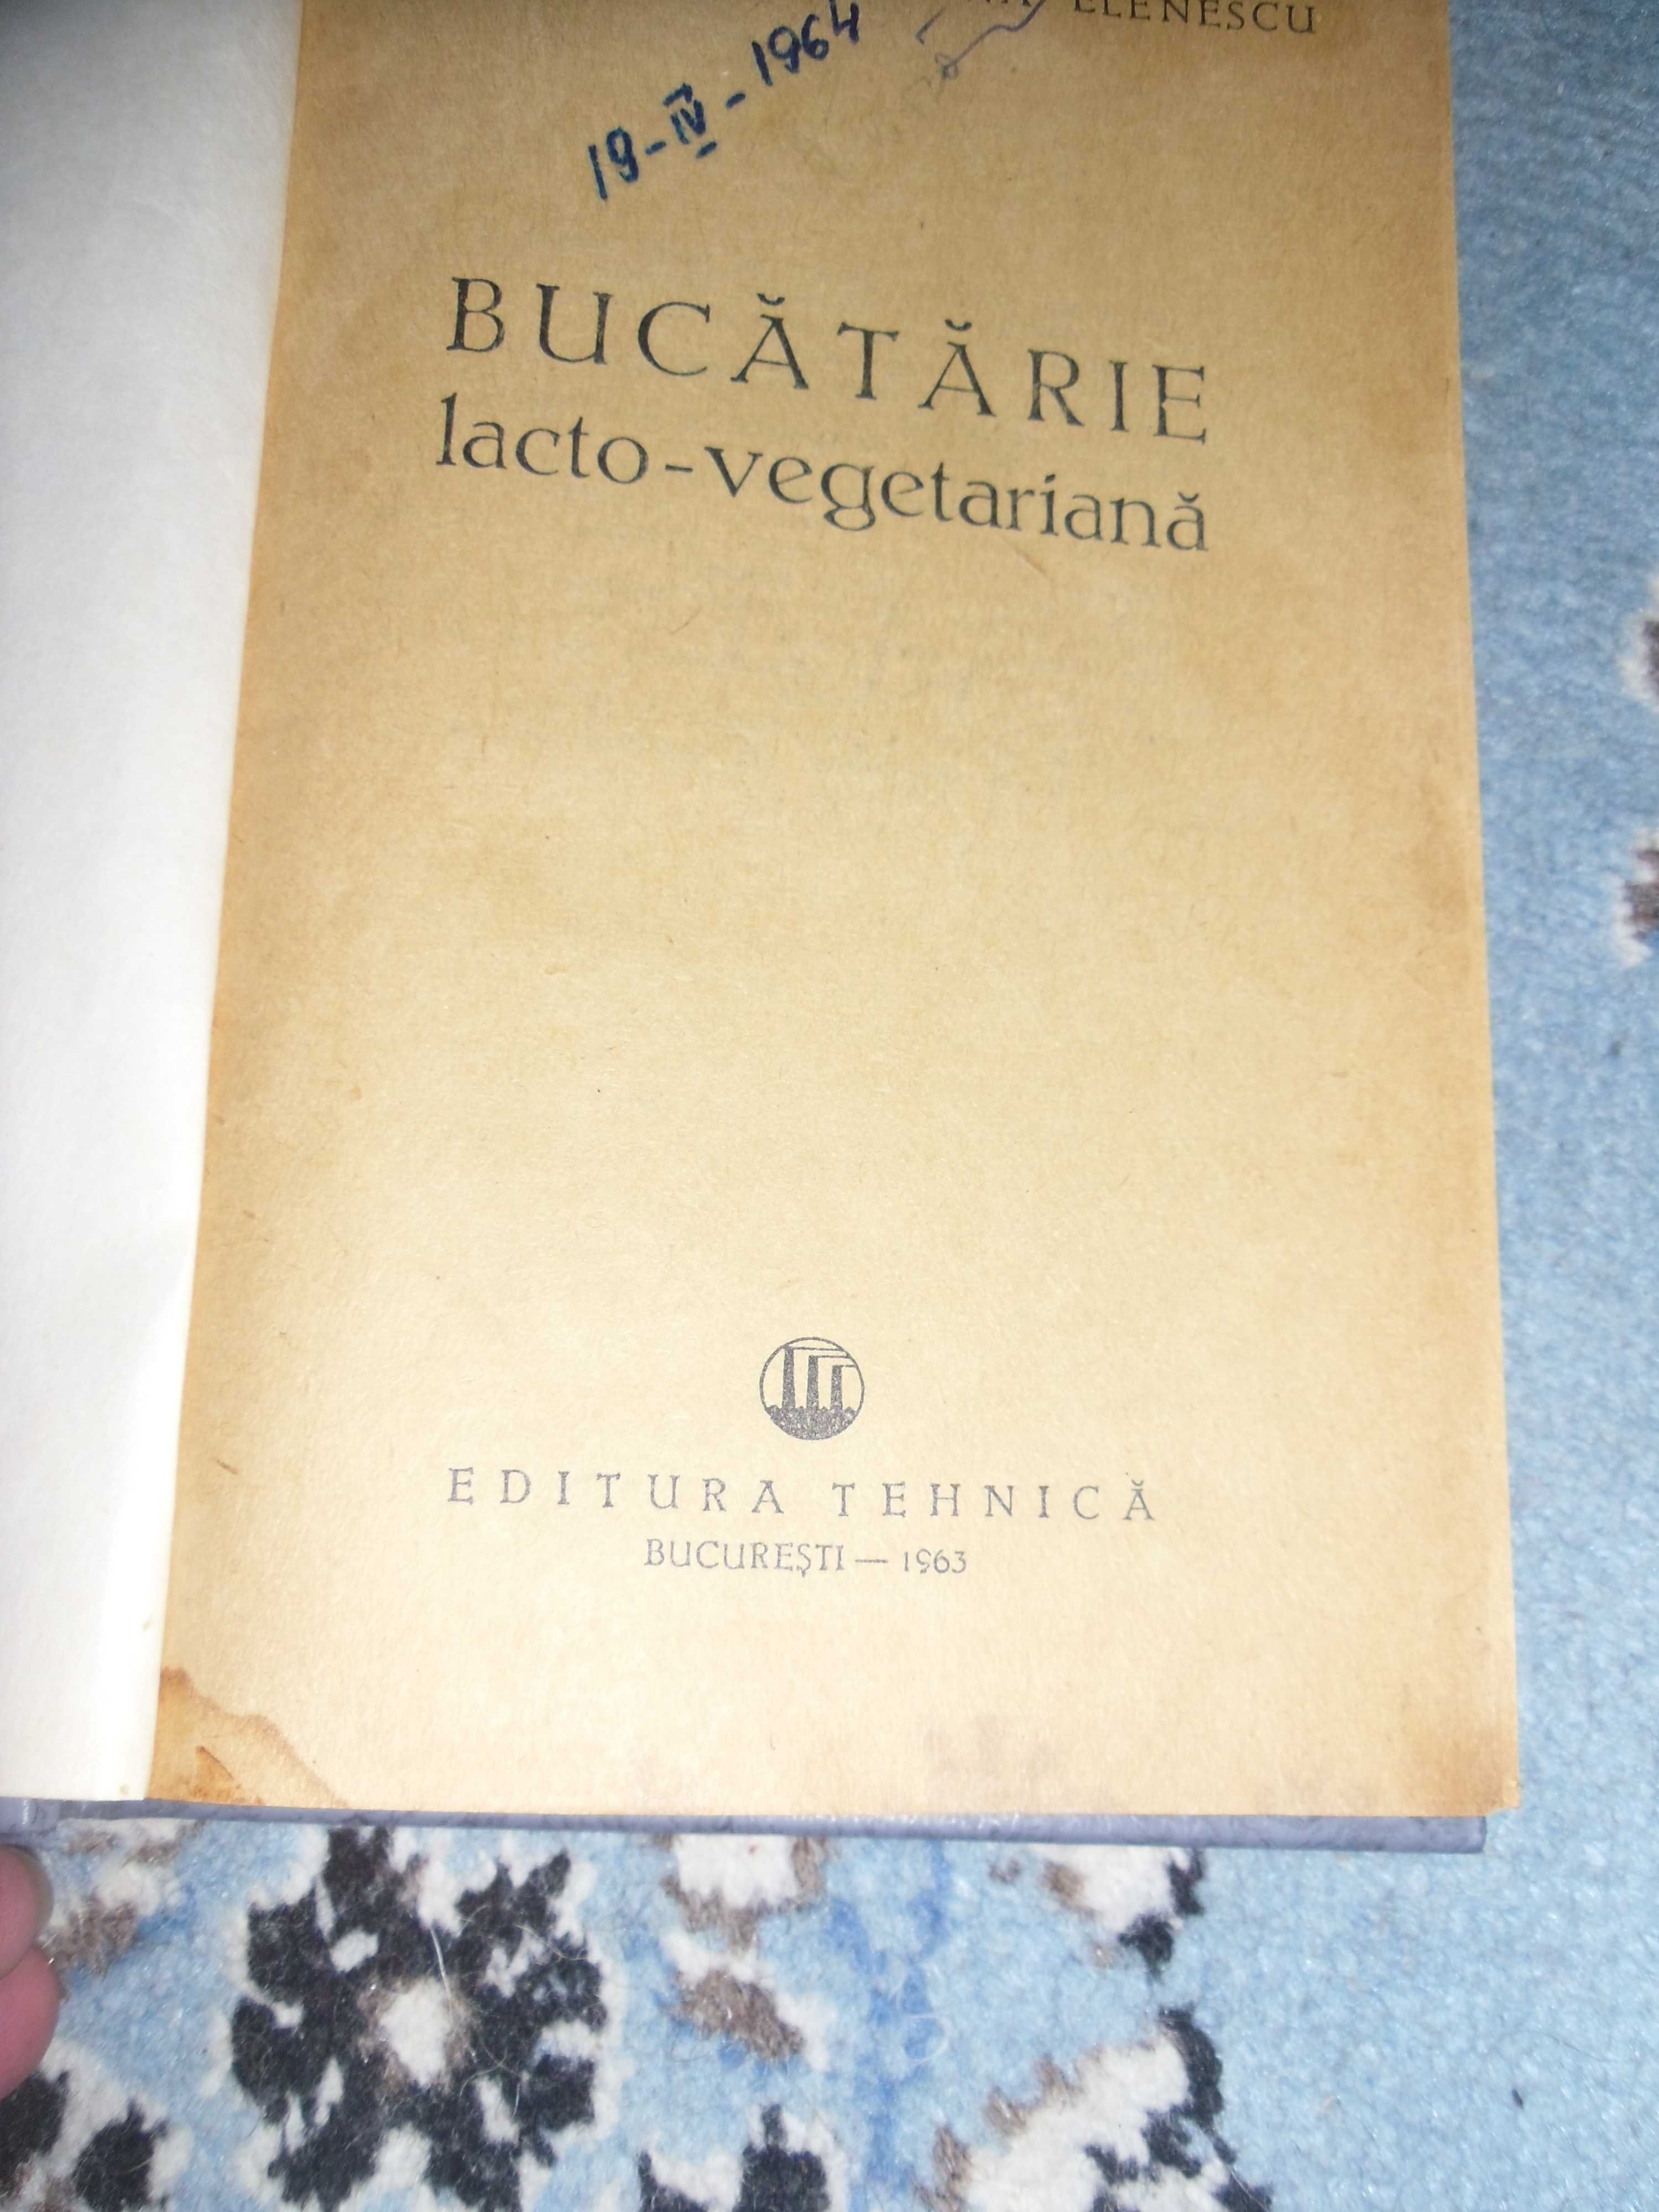 Carte de bucate , Bucatarie lacto-veg. ed 1963 -